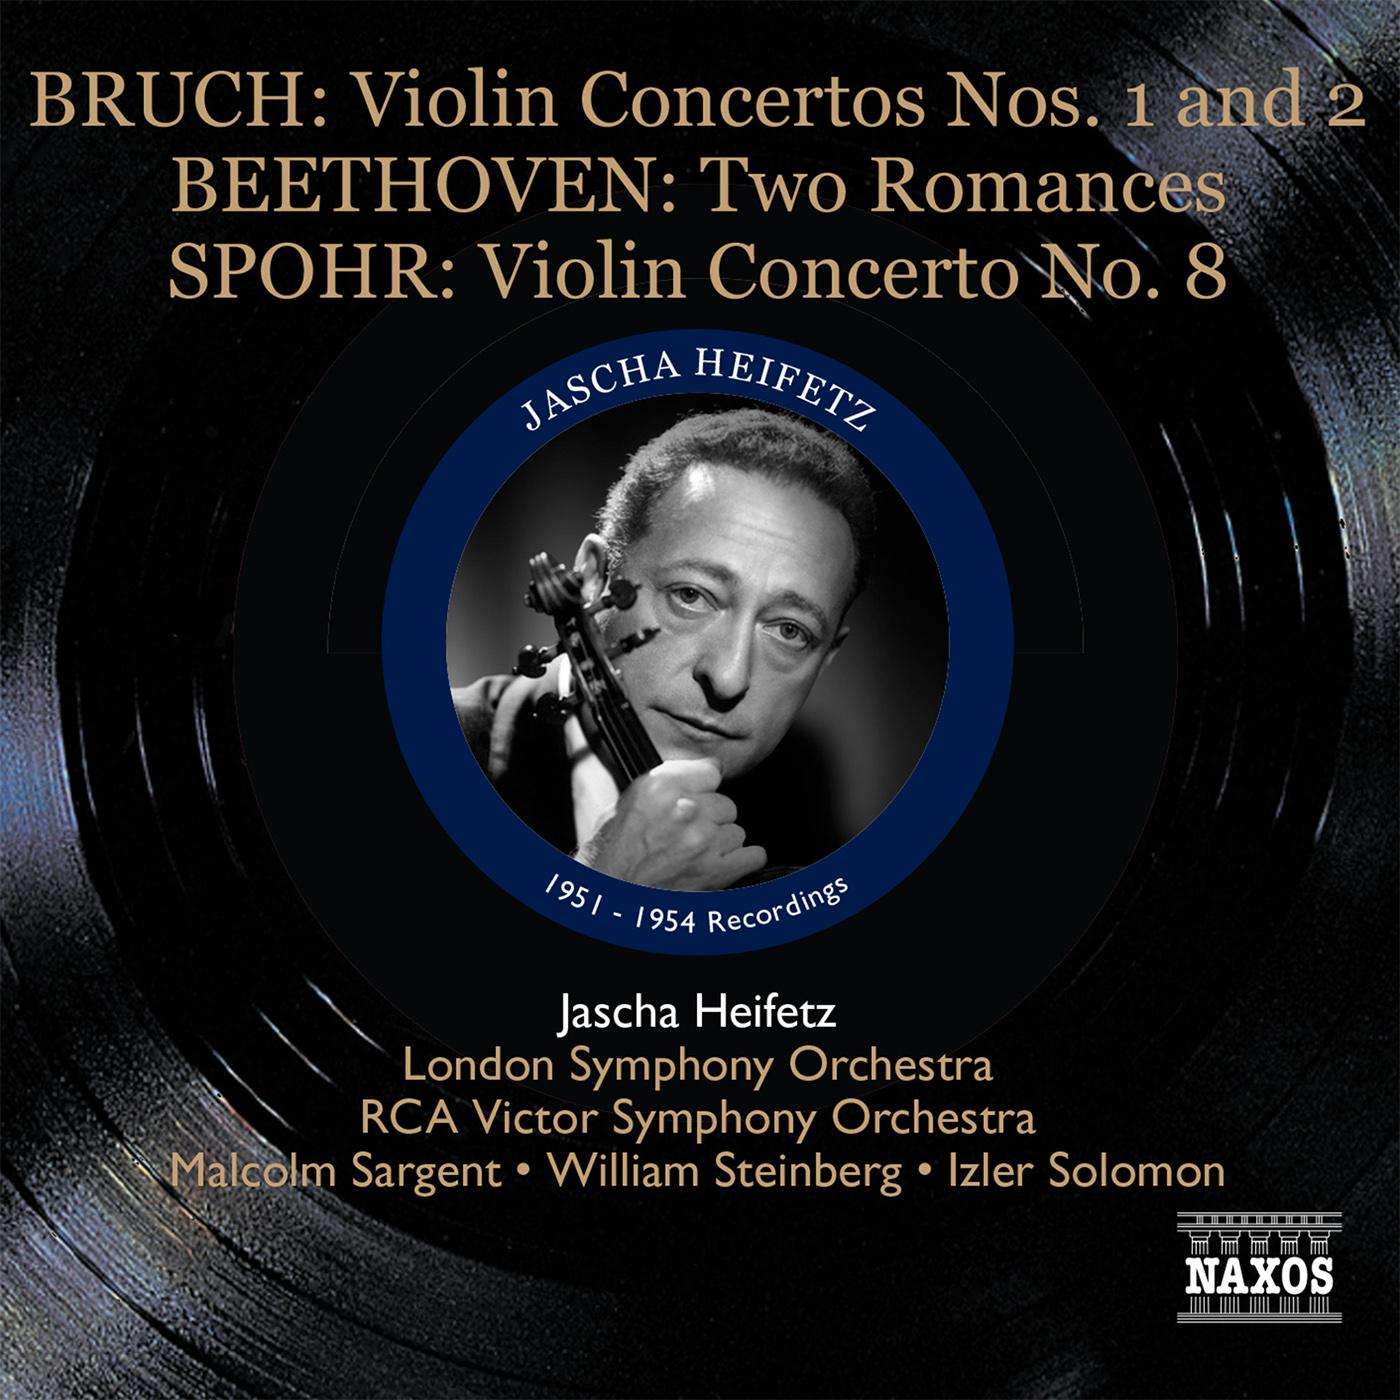 BRUCH, M.: Violin Concertos Nos. 1 and 2 / BEETHOVEN, L. van: Romances / SPOHR, L.: Violin Concerto No. 8 (Heifetz) (1951-1954)